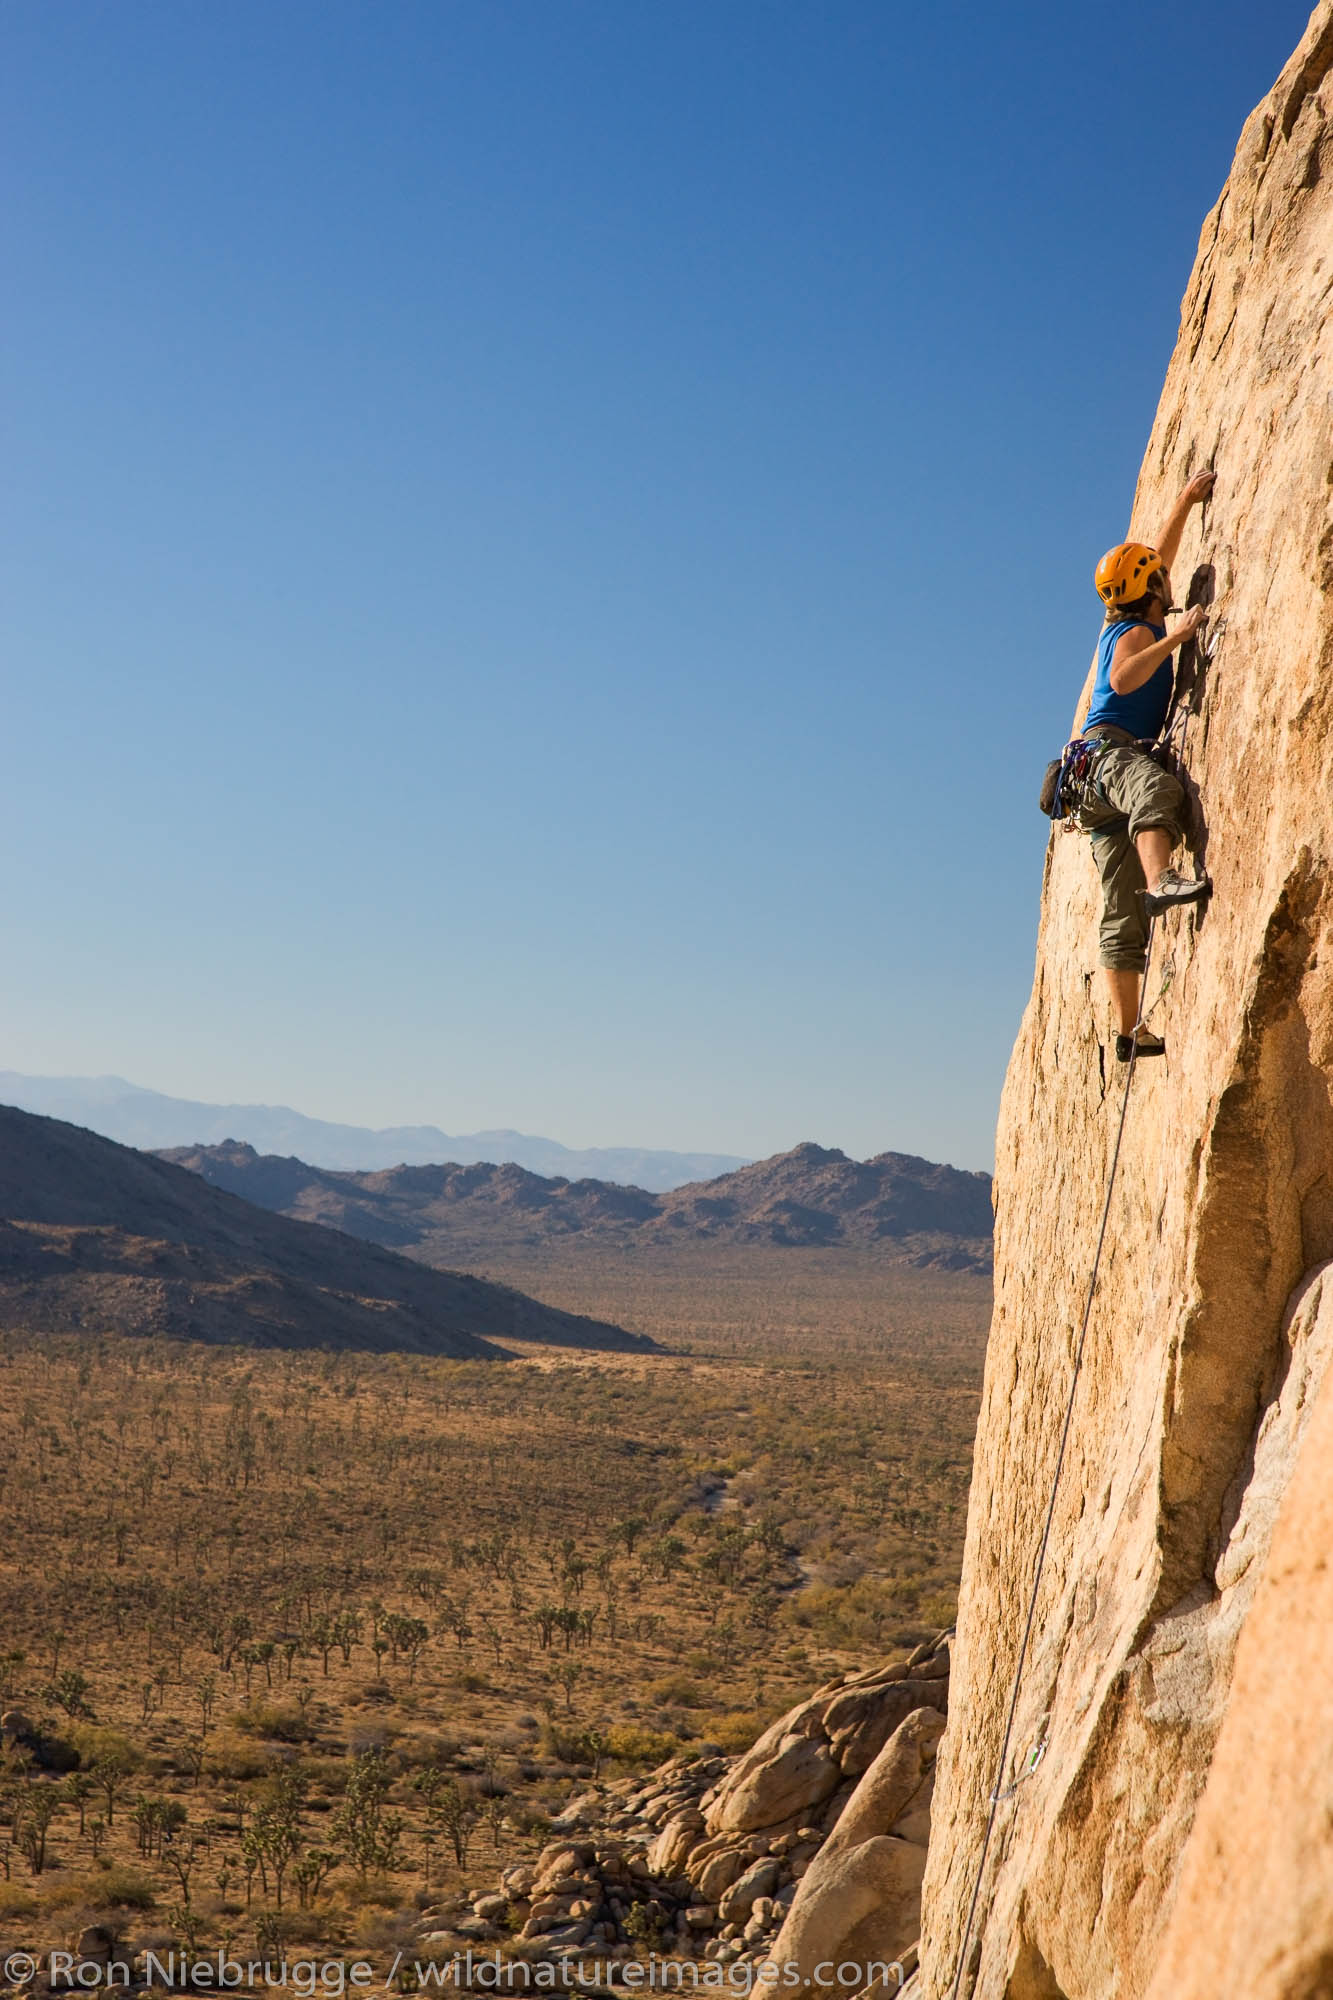 Thomas Vetsch rock climbing in Joshua Tree National Park, California.  (model released)